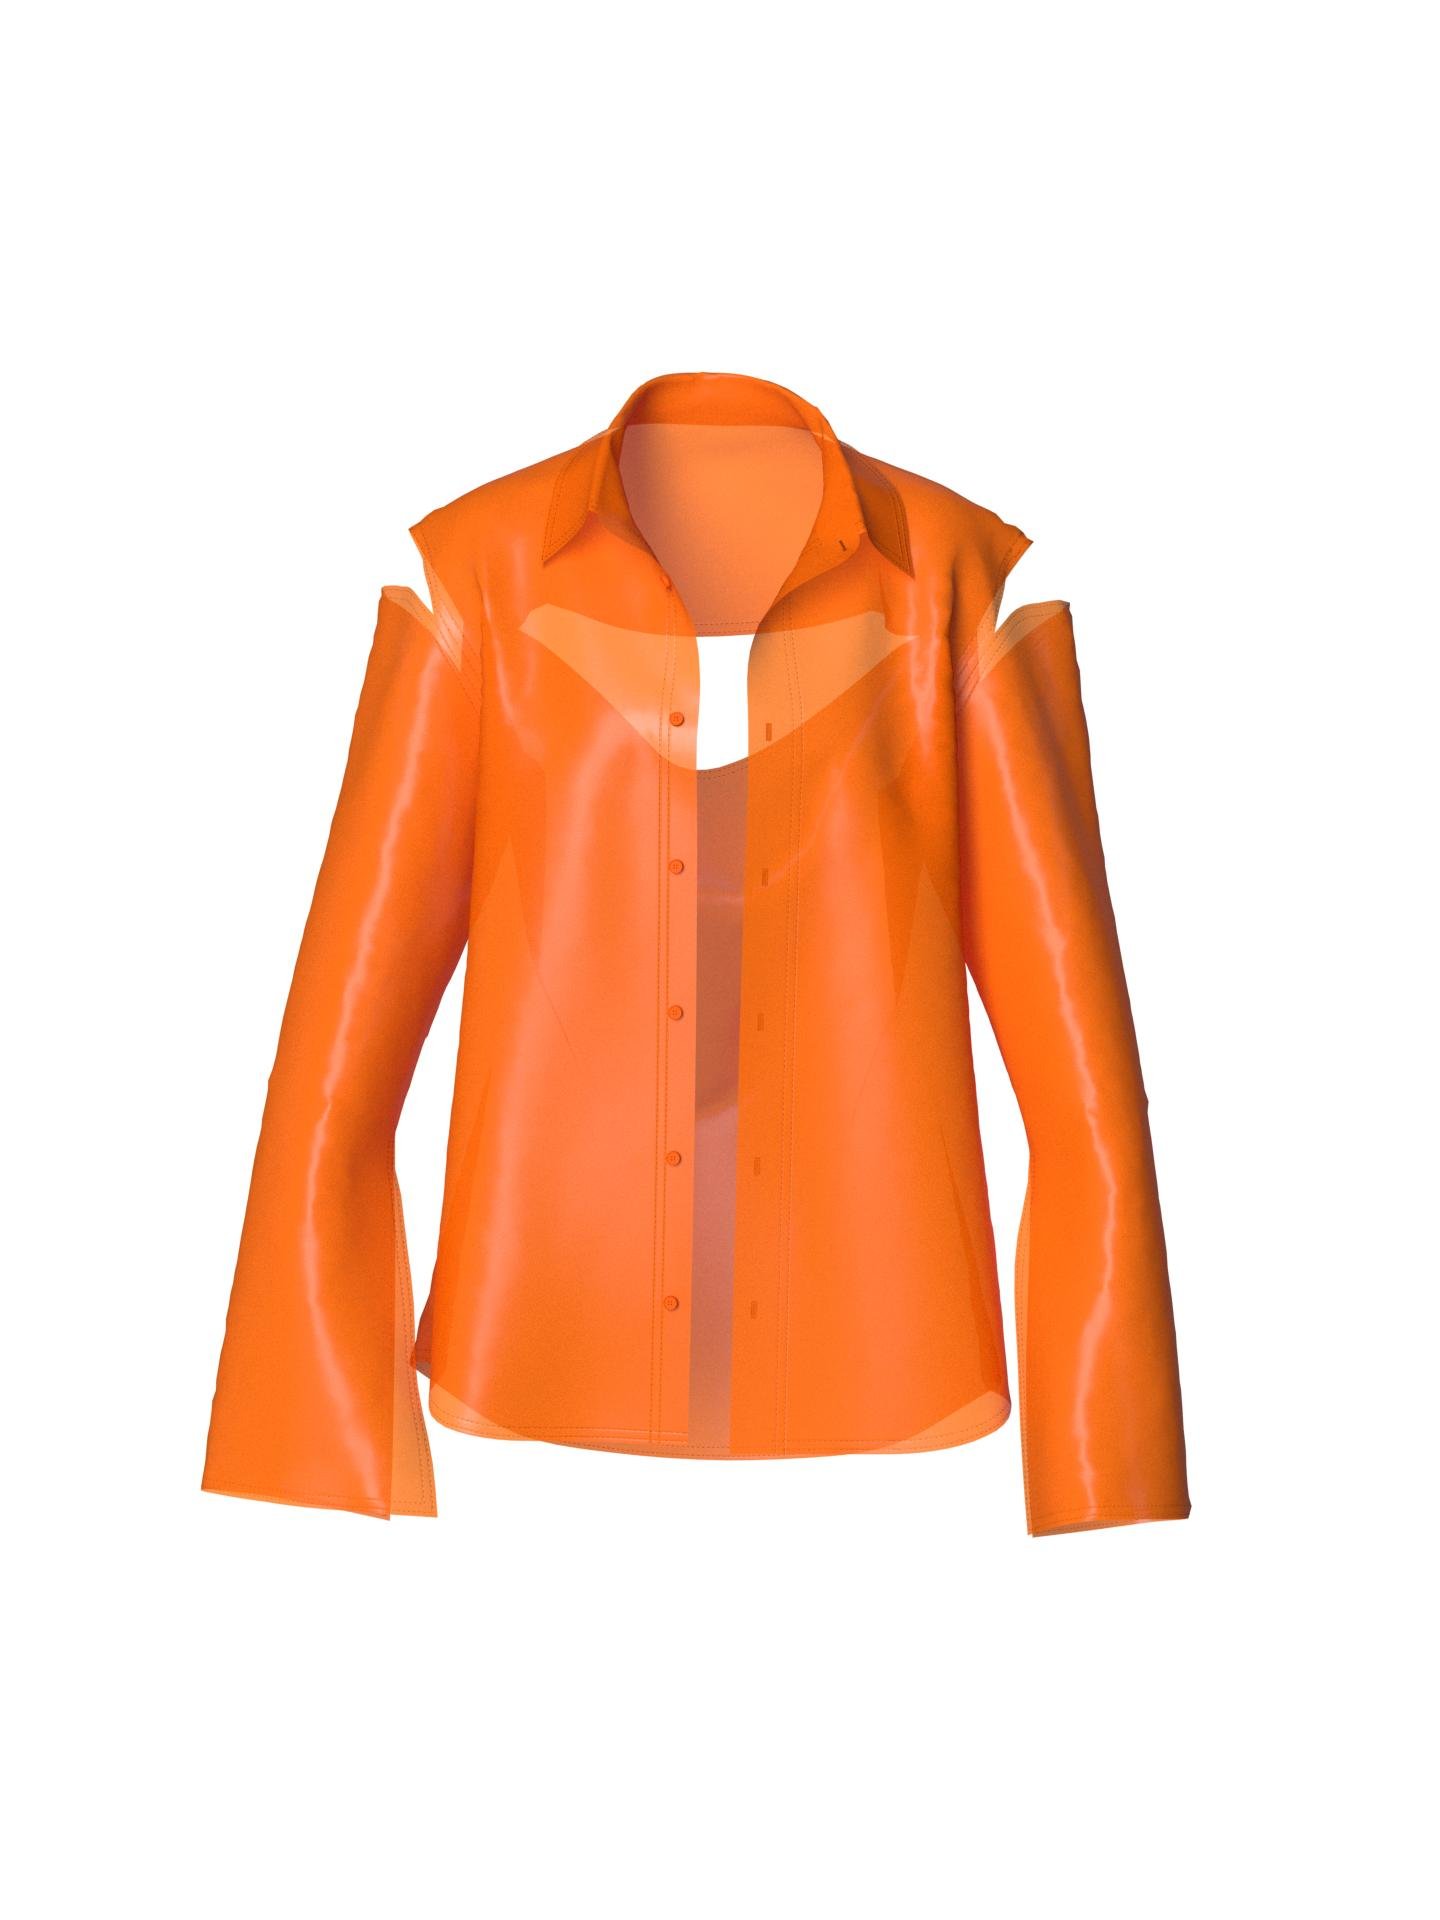 Semi-Transparent Orange Blazer by Nina Doll by NINA DOLL